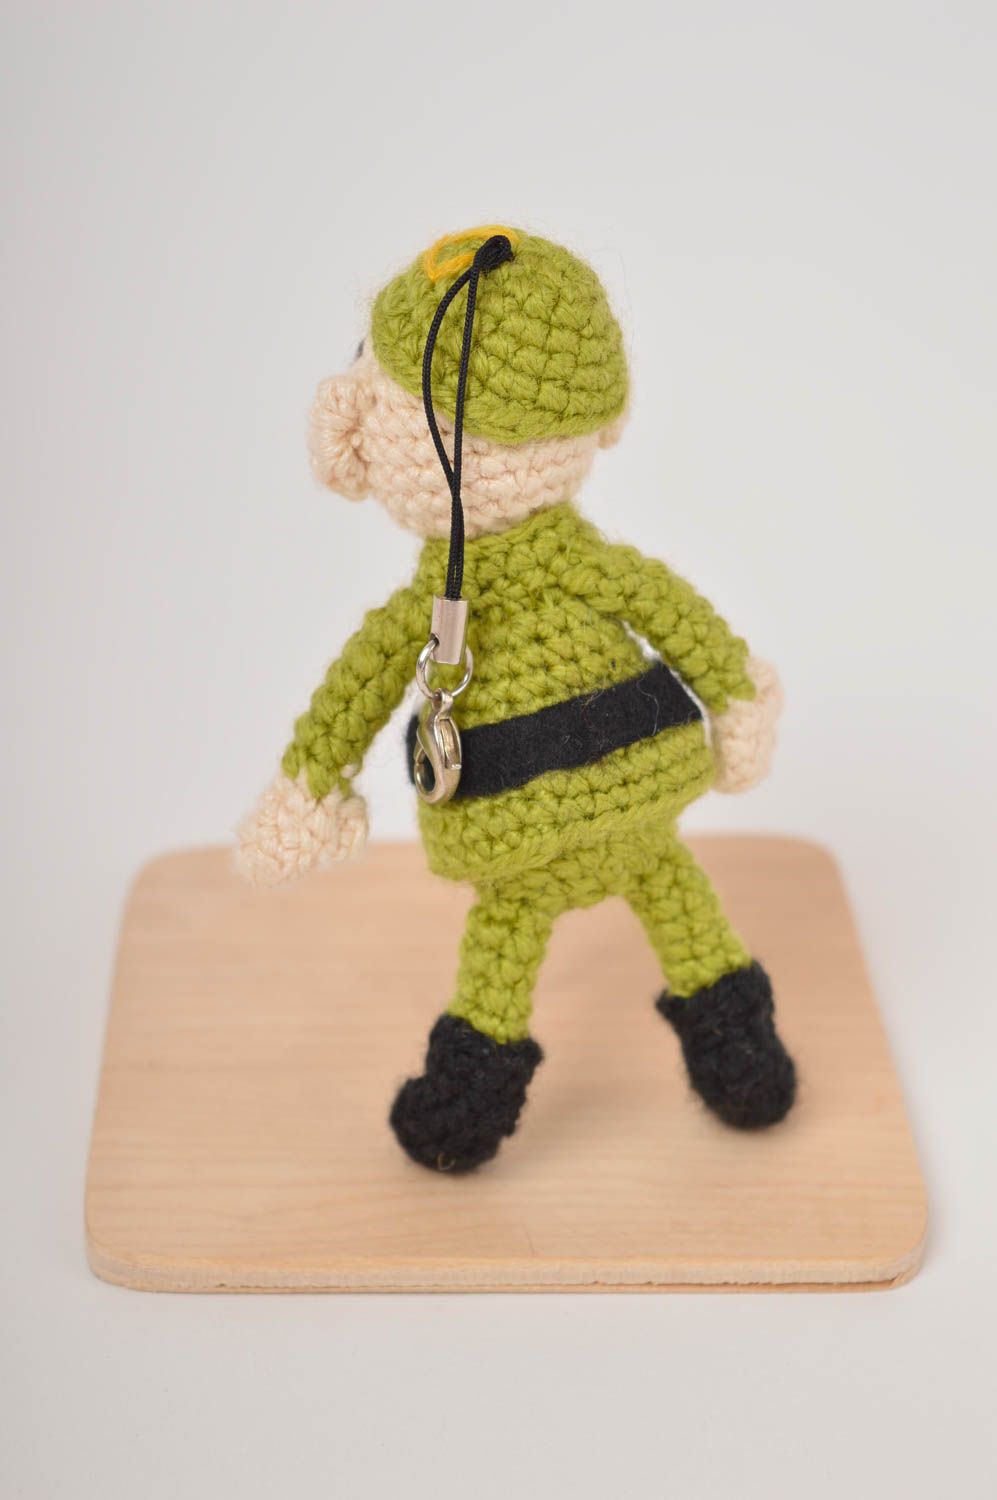 Handmade stuffed toy soft toys for children hand-crocheted toys interior decor photo 3